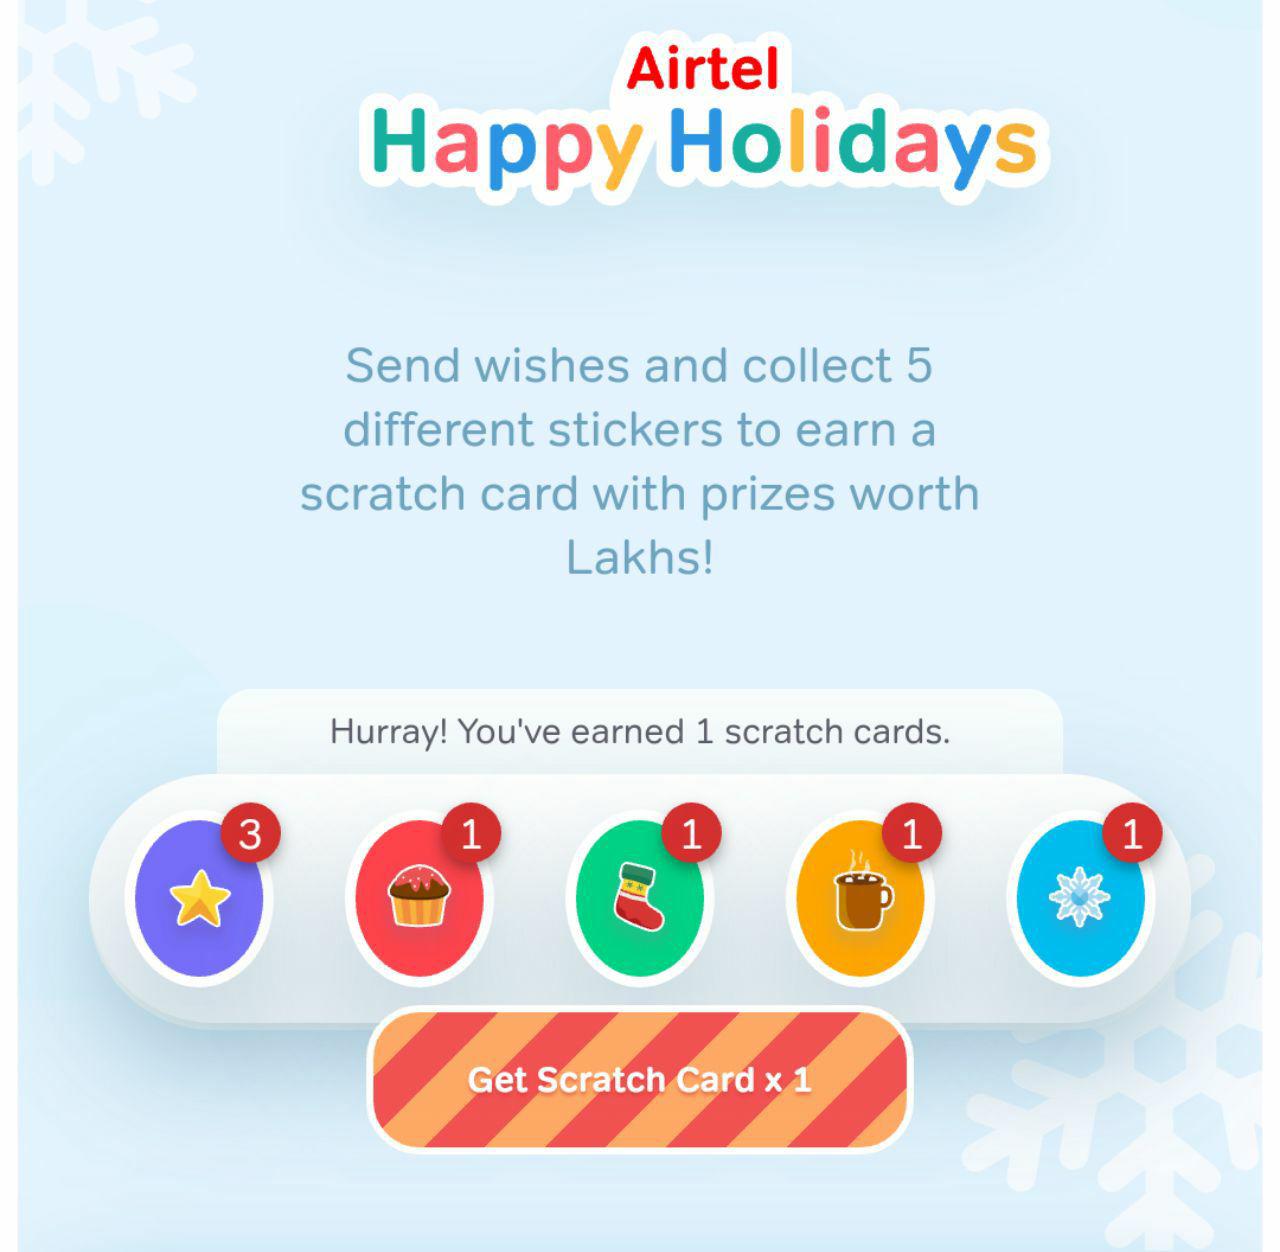 Airtel Happy Holidays Offer